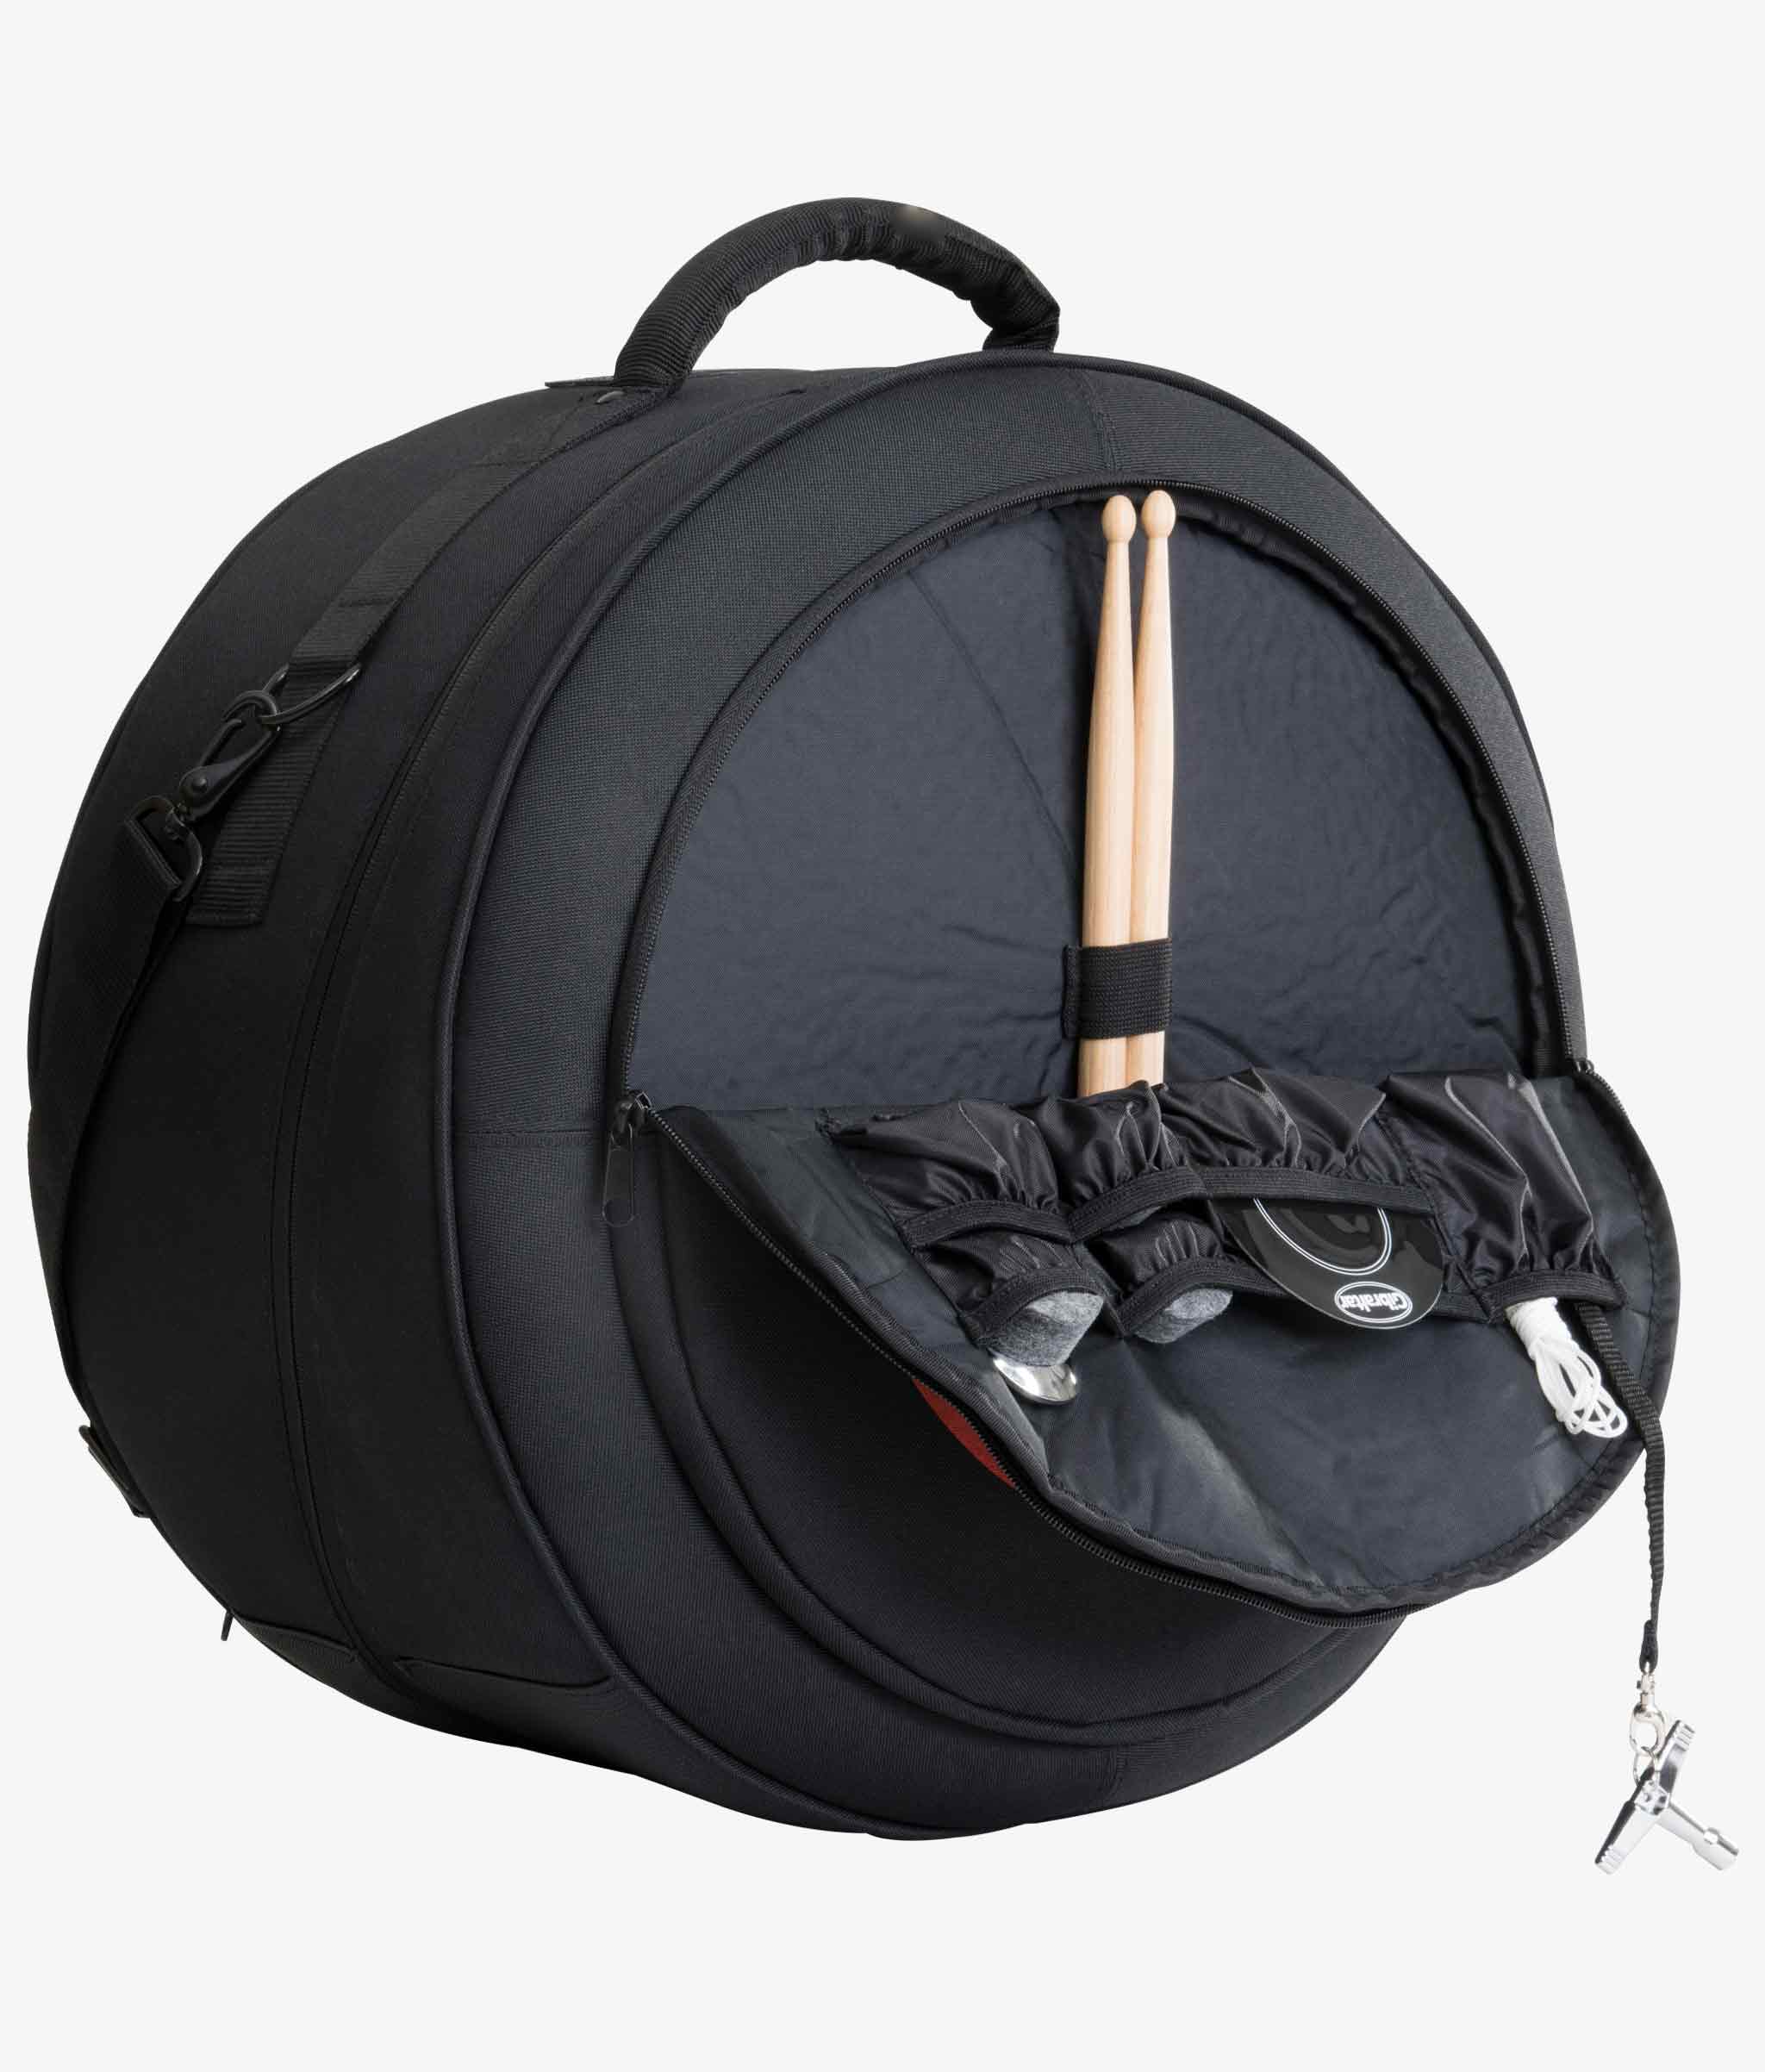 Portable Snare Drum Bag with Carry Handles Adjustable Strap Snare Drum  Backpack Snare Drum Carrying Bag Case for Show Outdoor Travel - Walmart.com